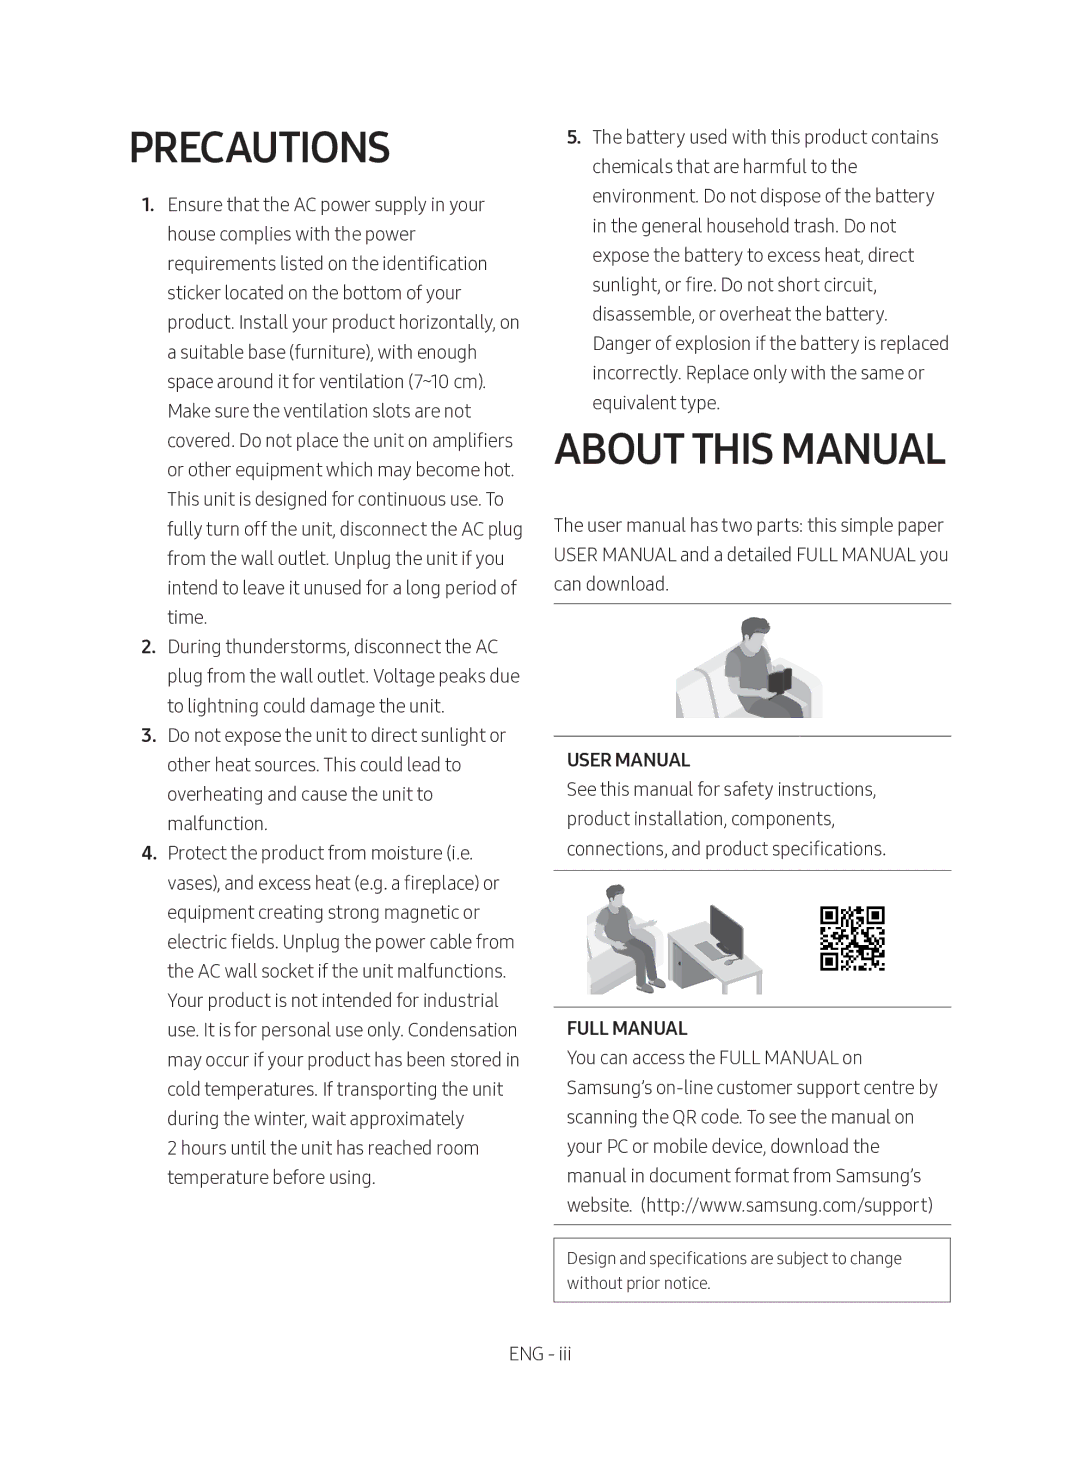 Samsung HW-N450/ZF manual Precautions, About this Manual, Full Manual 